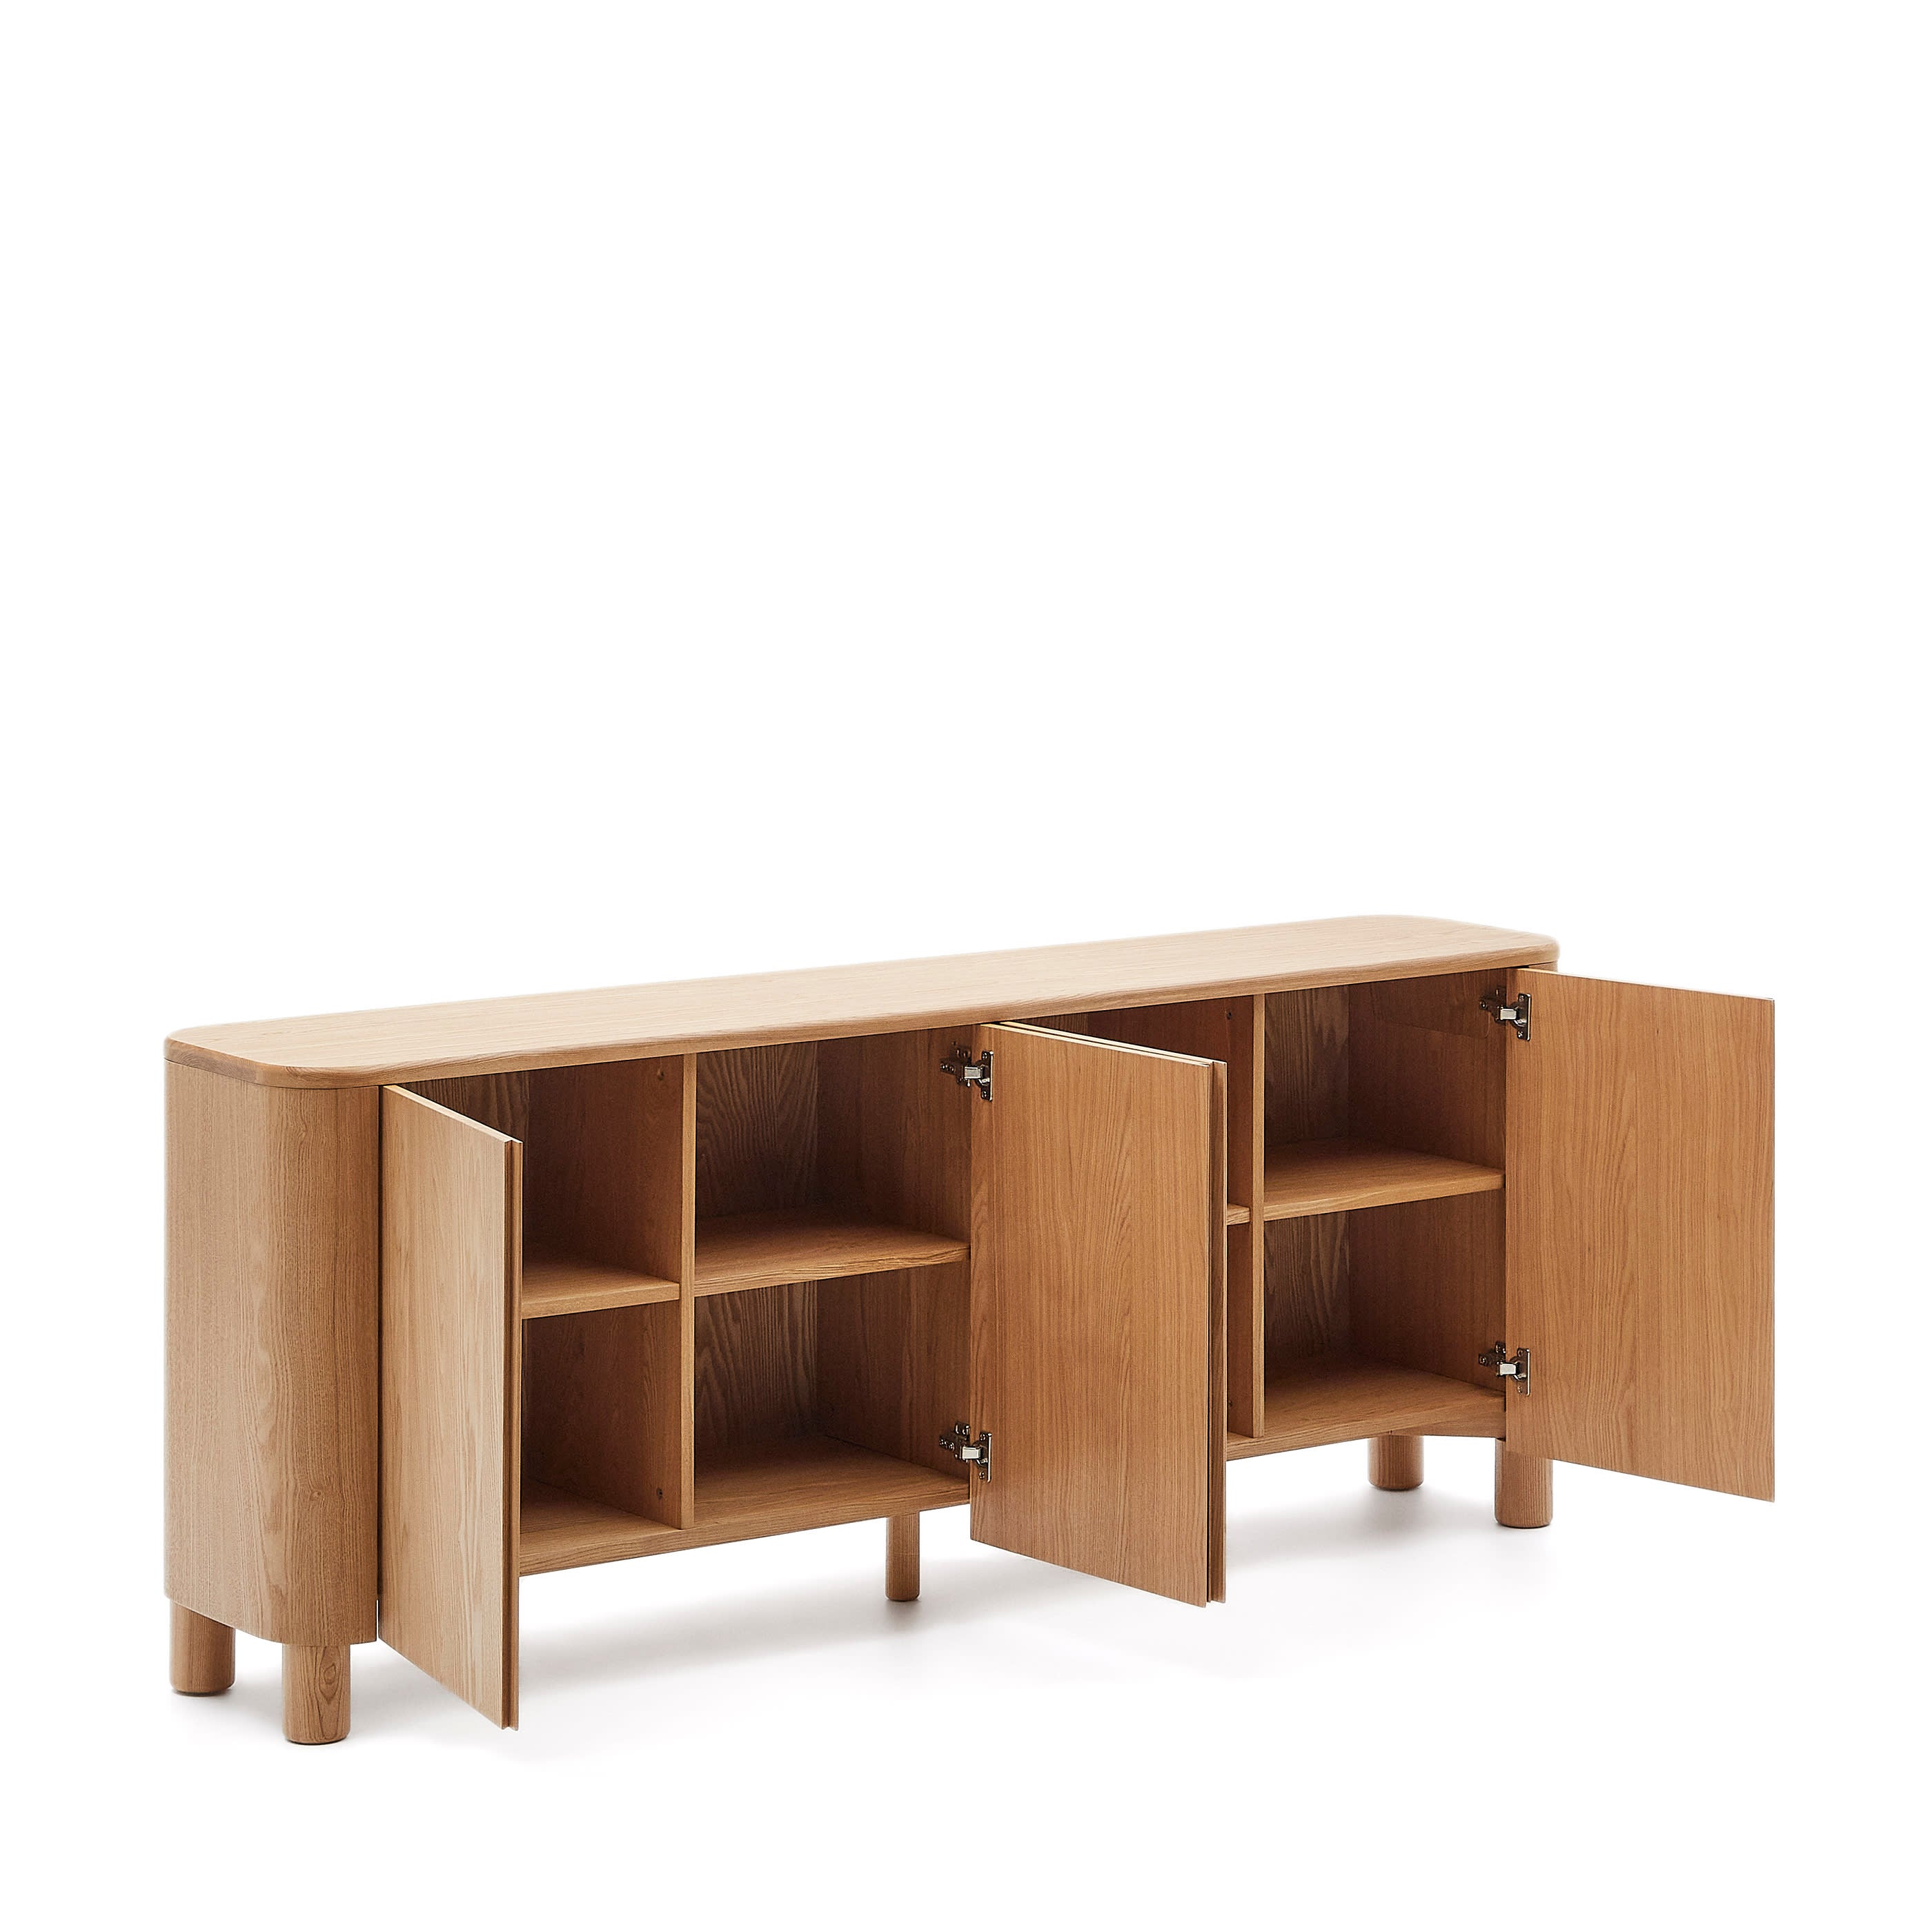 Salaya side cabinet in ash plywood FSC Mix Credit, 200 cm x 79 cm